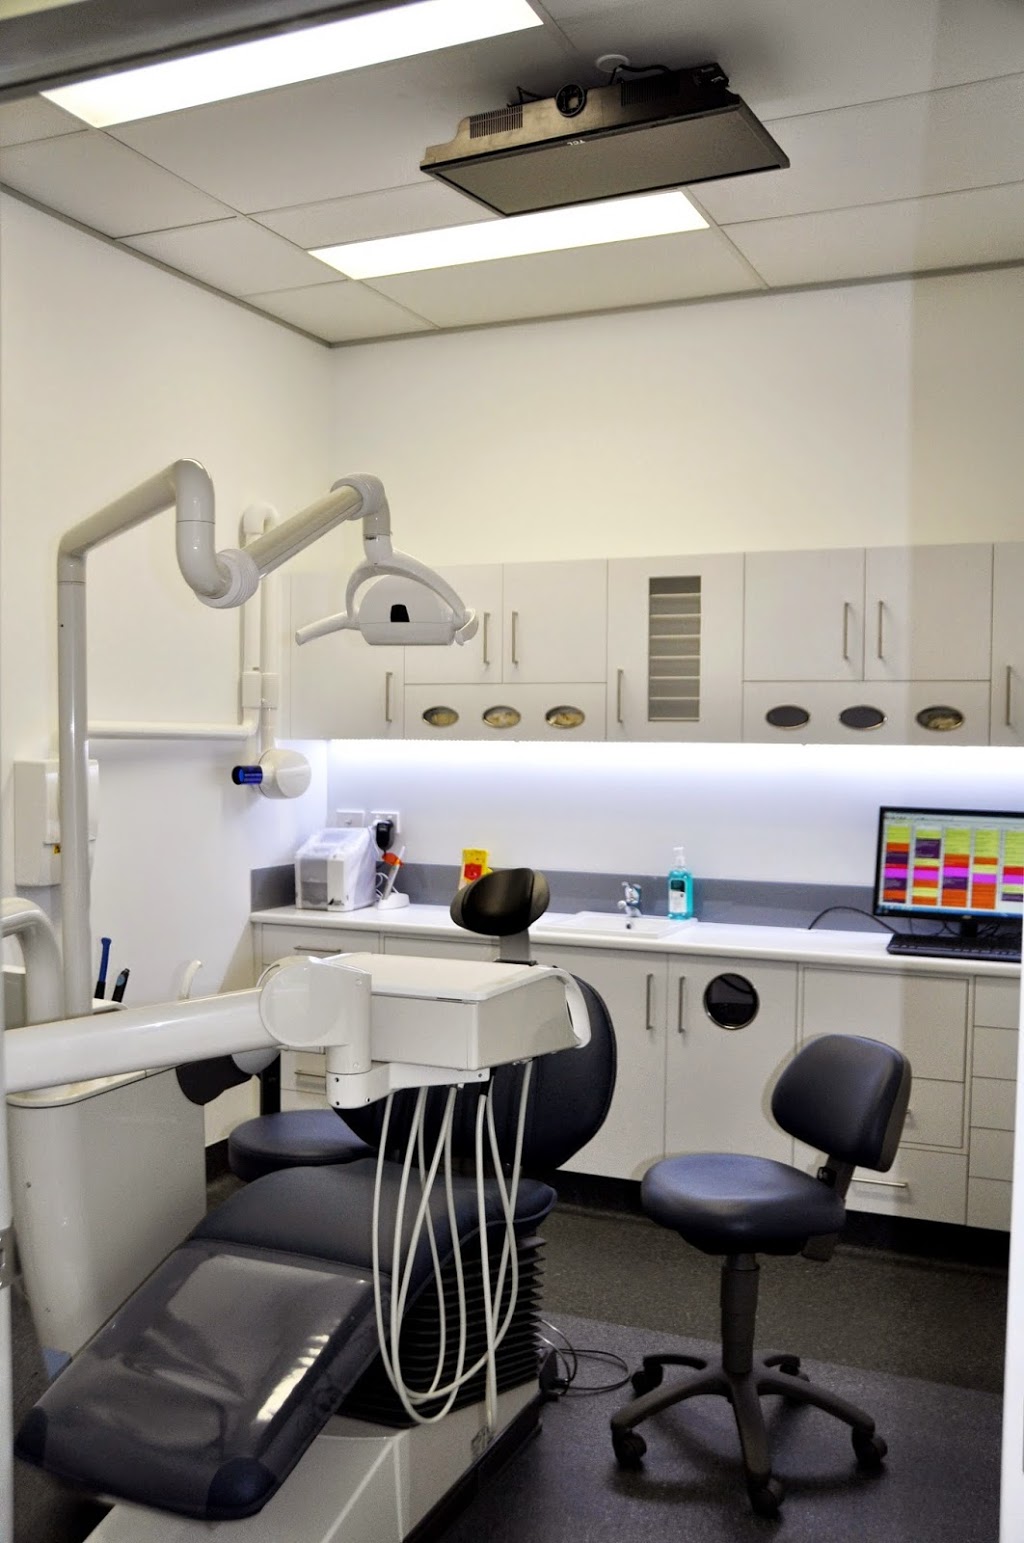 Beachmere Dental | dentist | Shop 7, 2 James Road, Beachmere QLD 4510, Australia | 0754968579 OR +61 7 5496 8579